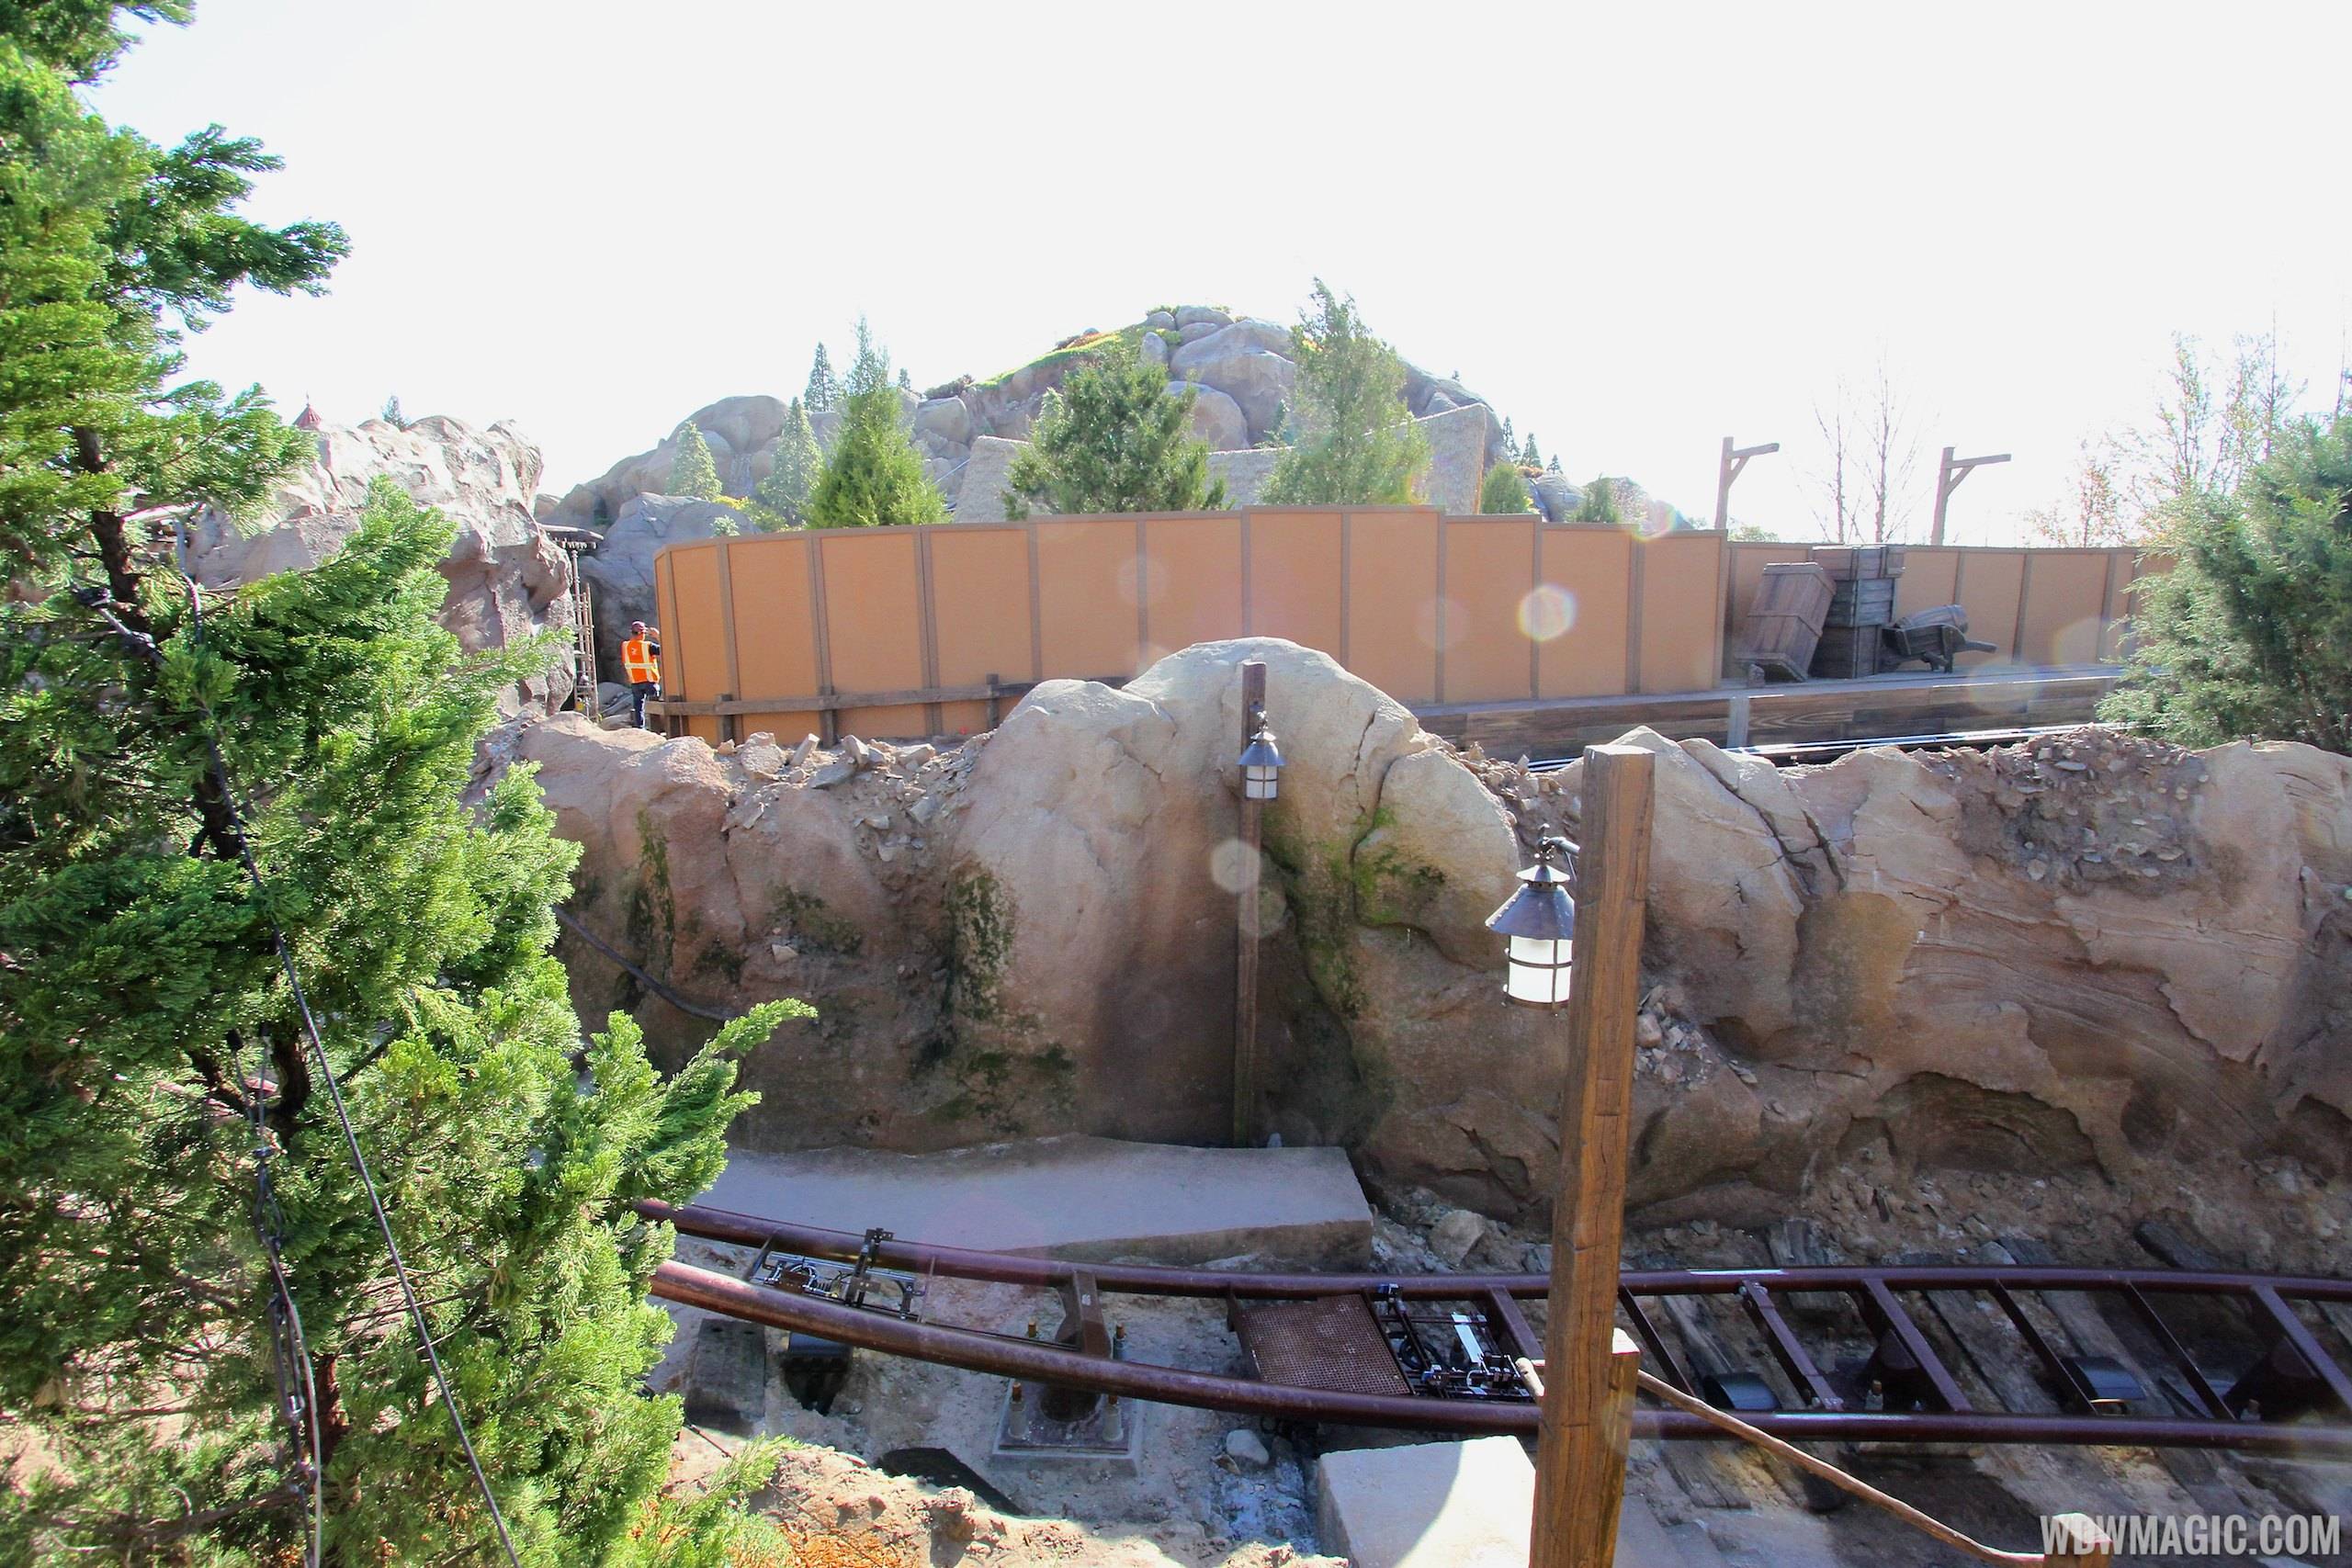 PHOTOS - More construction walls come down at the Seven Dwarfs Mine Train coaster